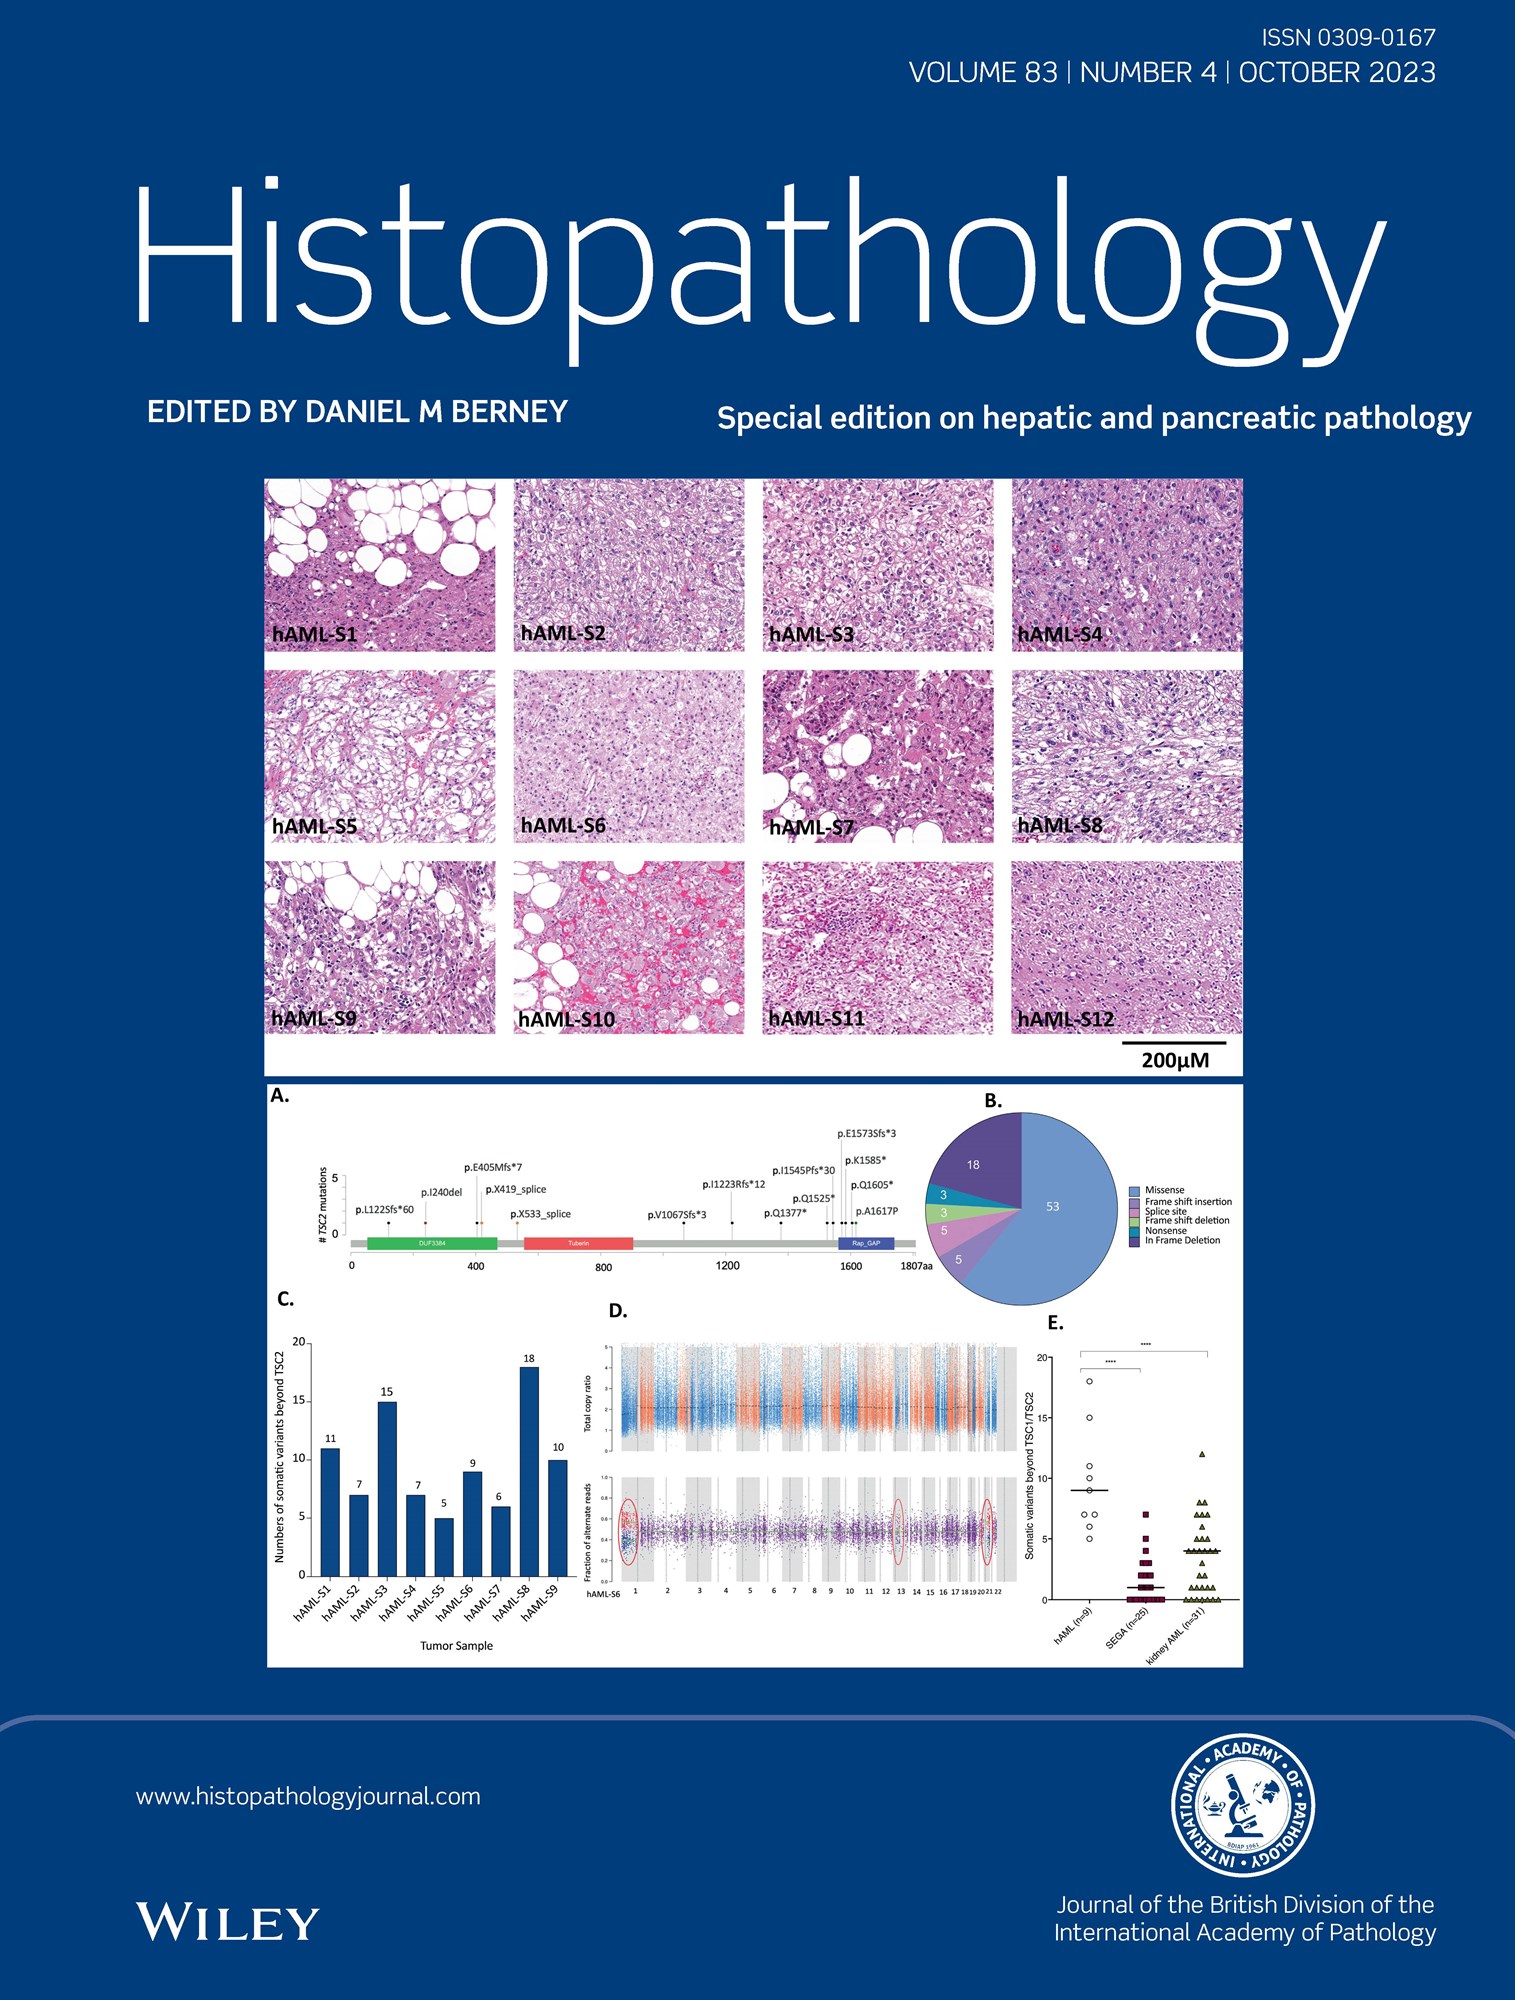 Histopathology Journal: Latest Issue Now Available image